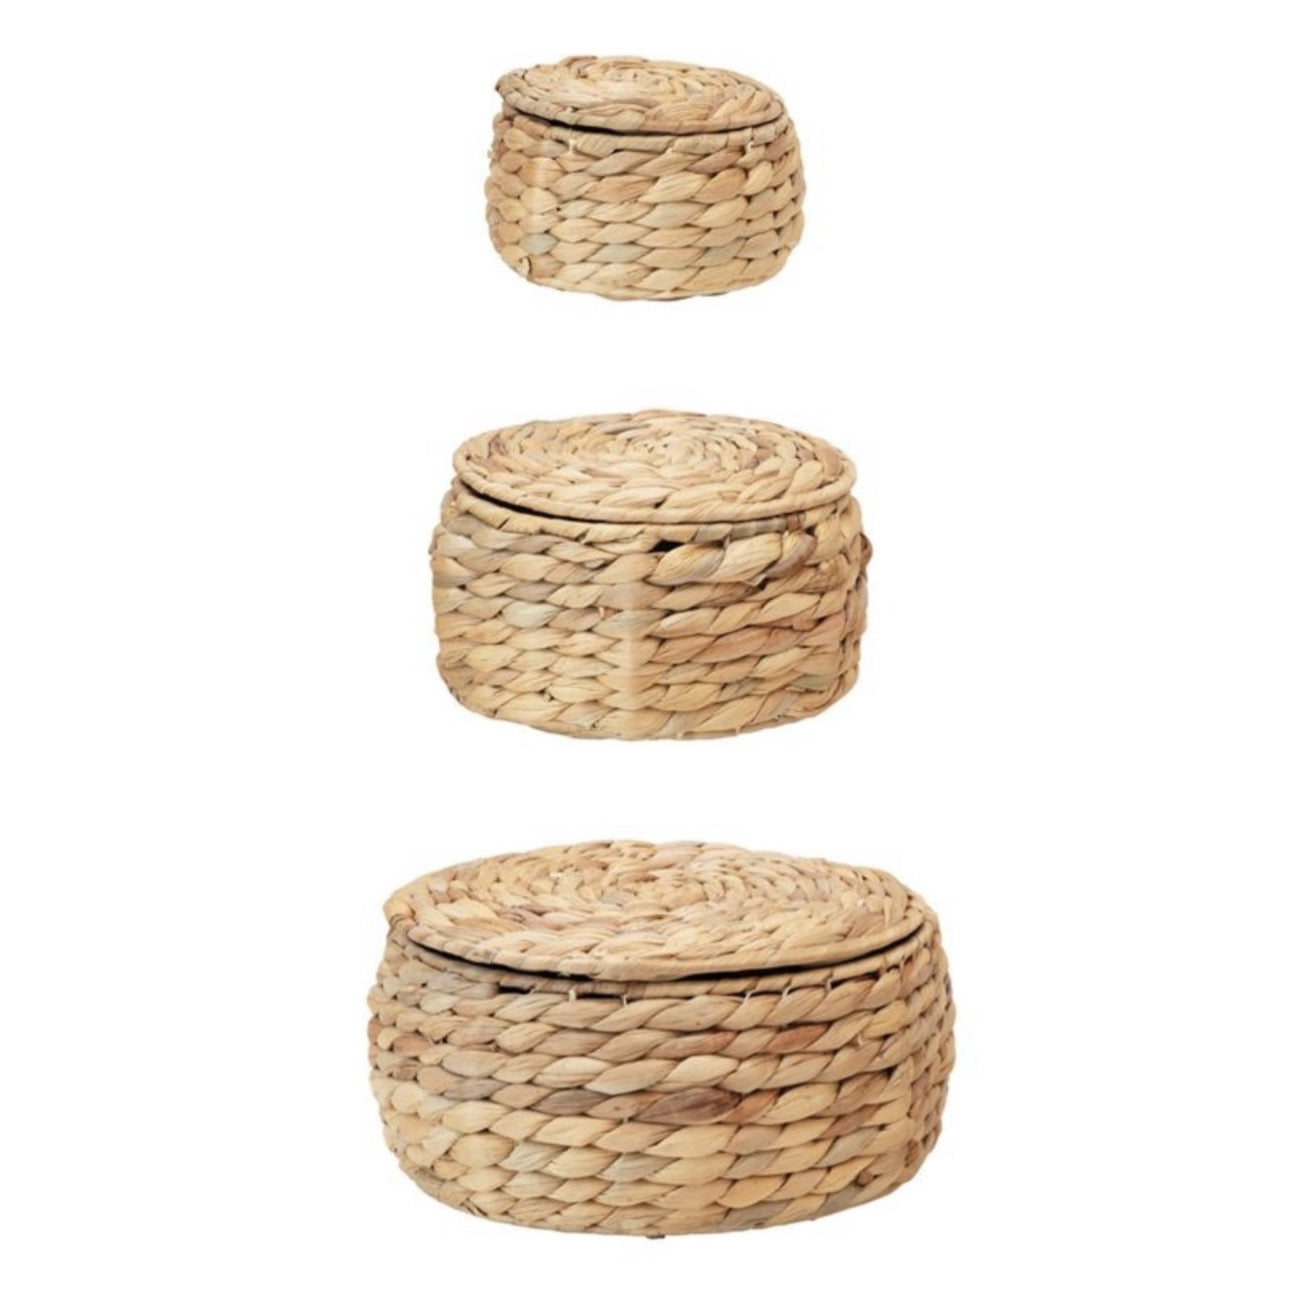 Water Hyacinth Baskets w/ Lids, Natural-3 sizes